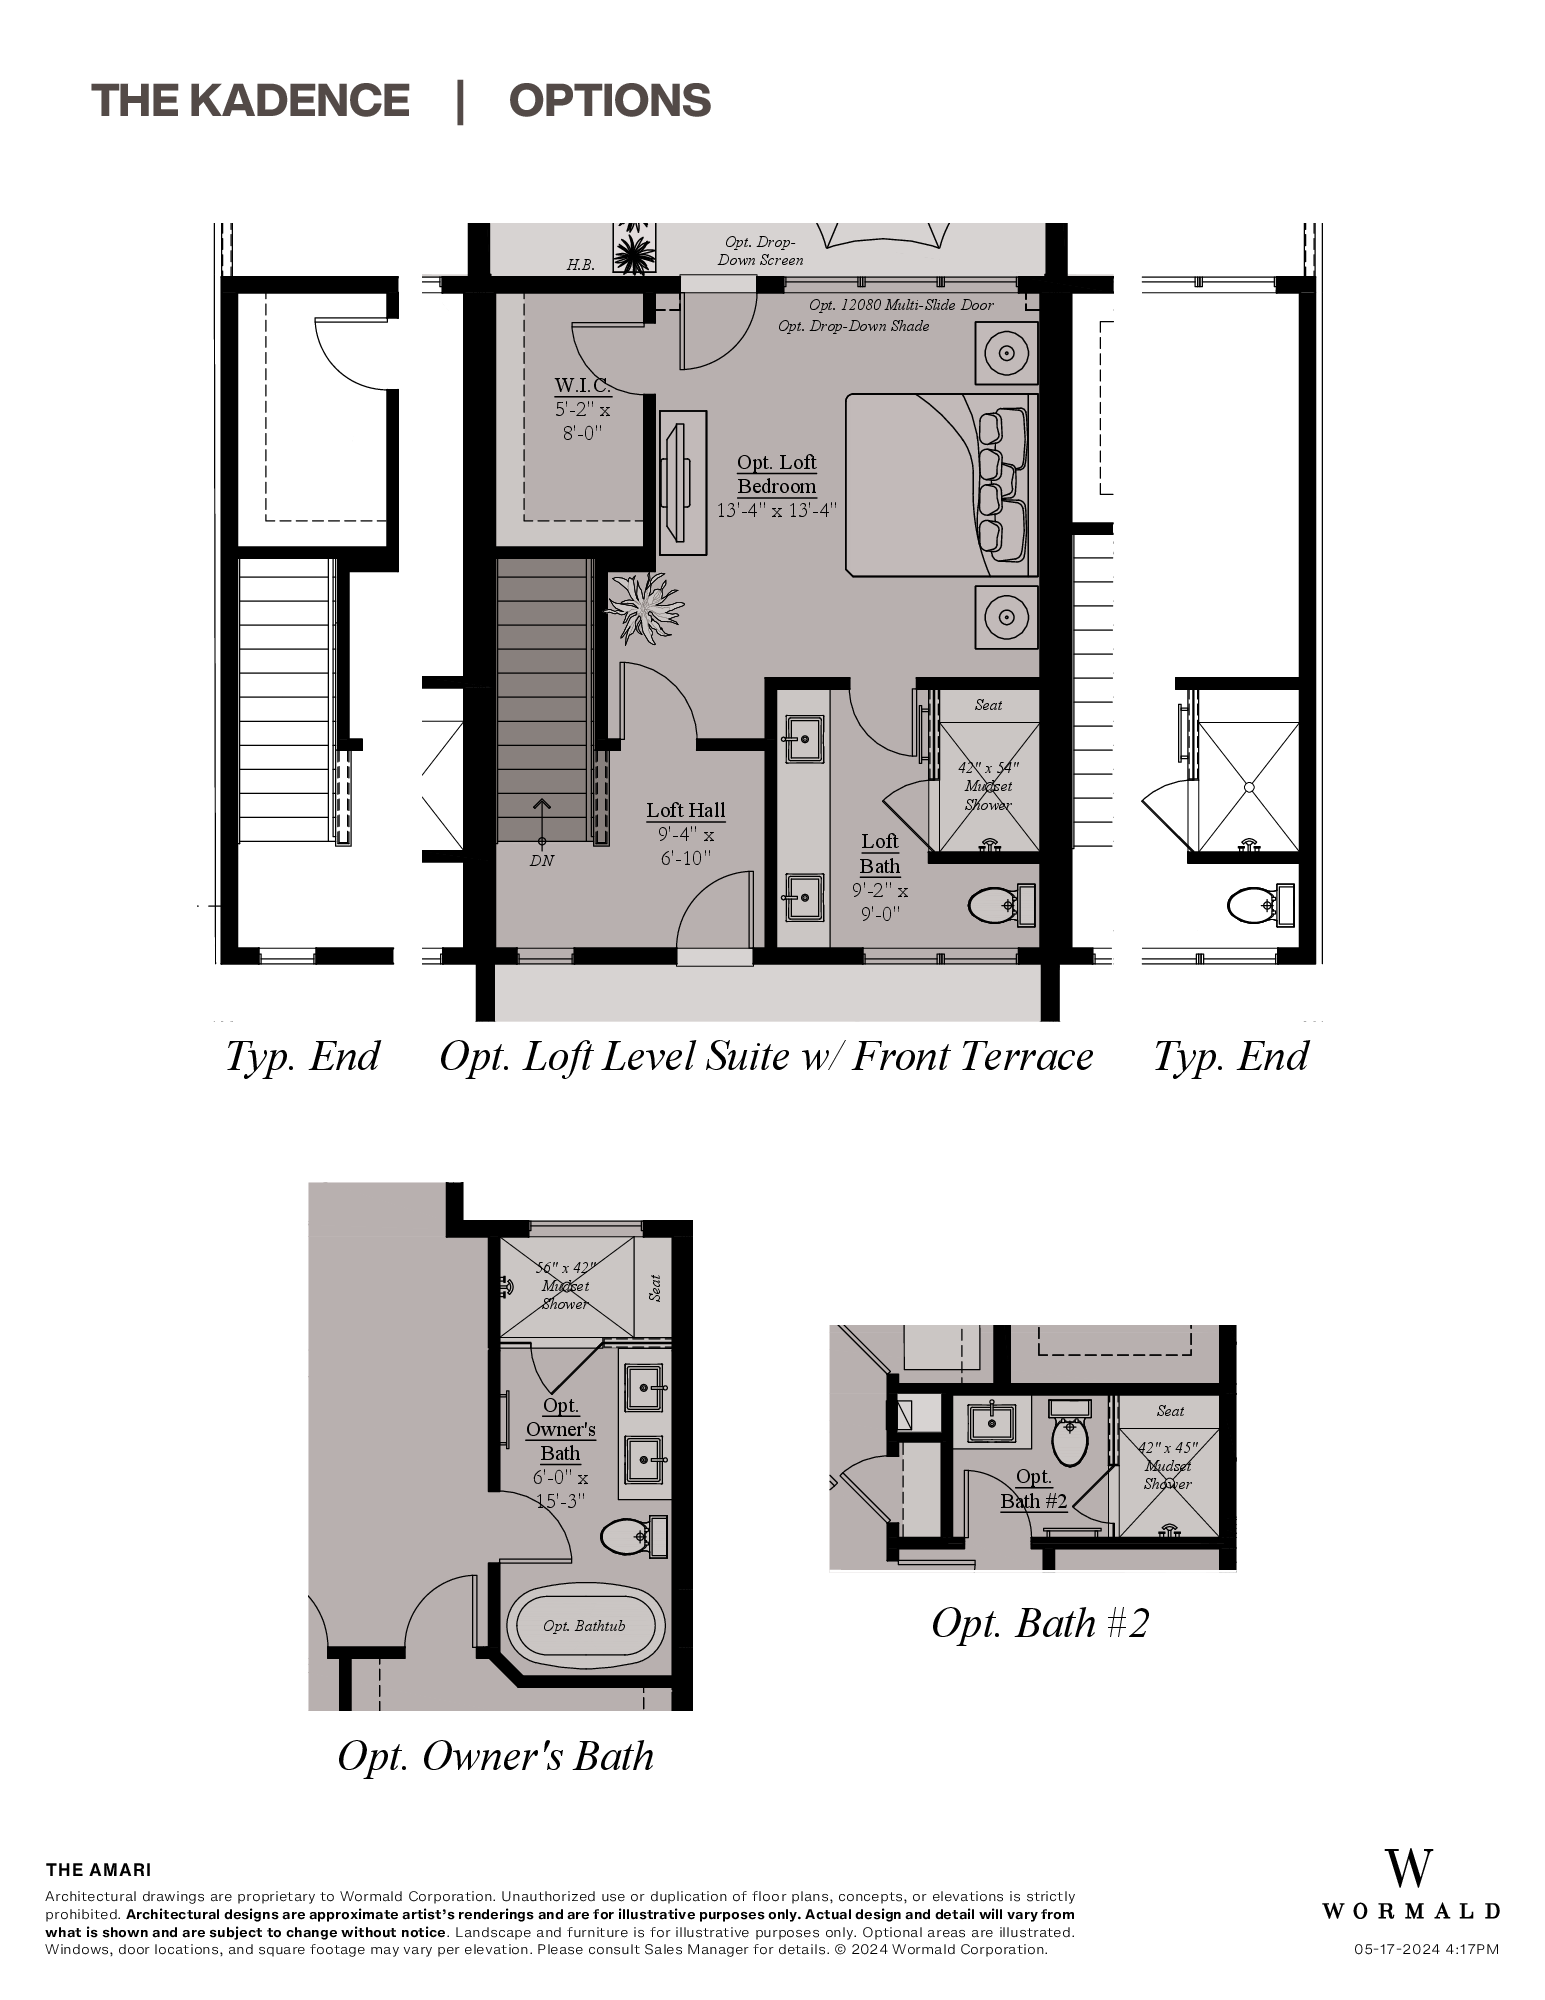 The Kadence floor plan 5